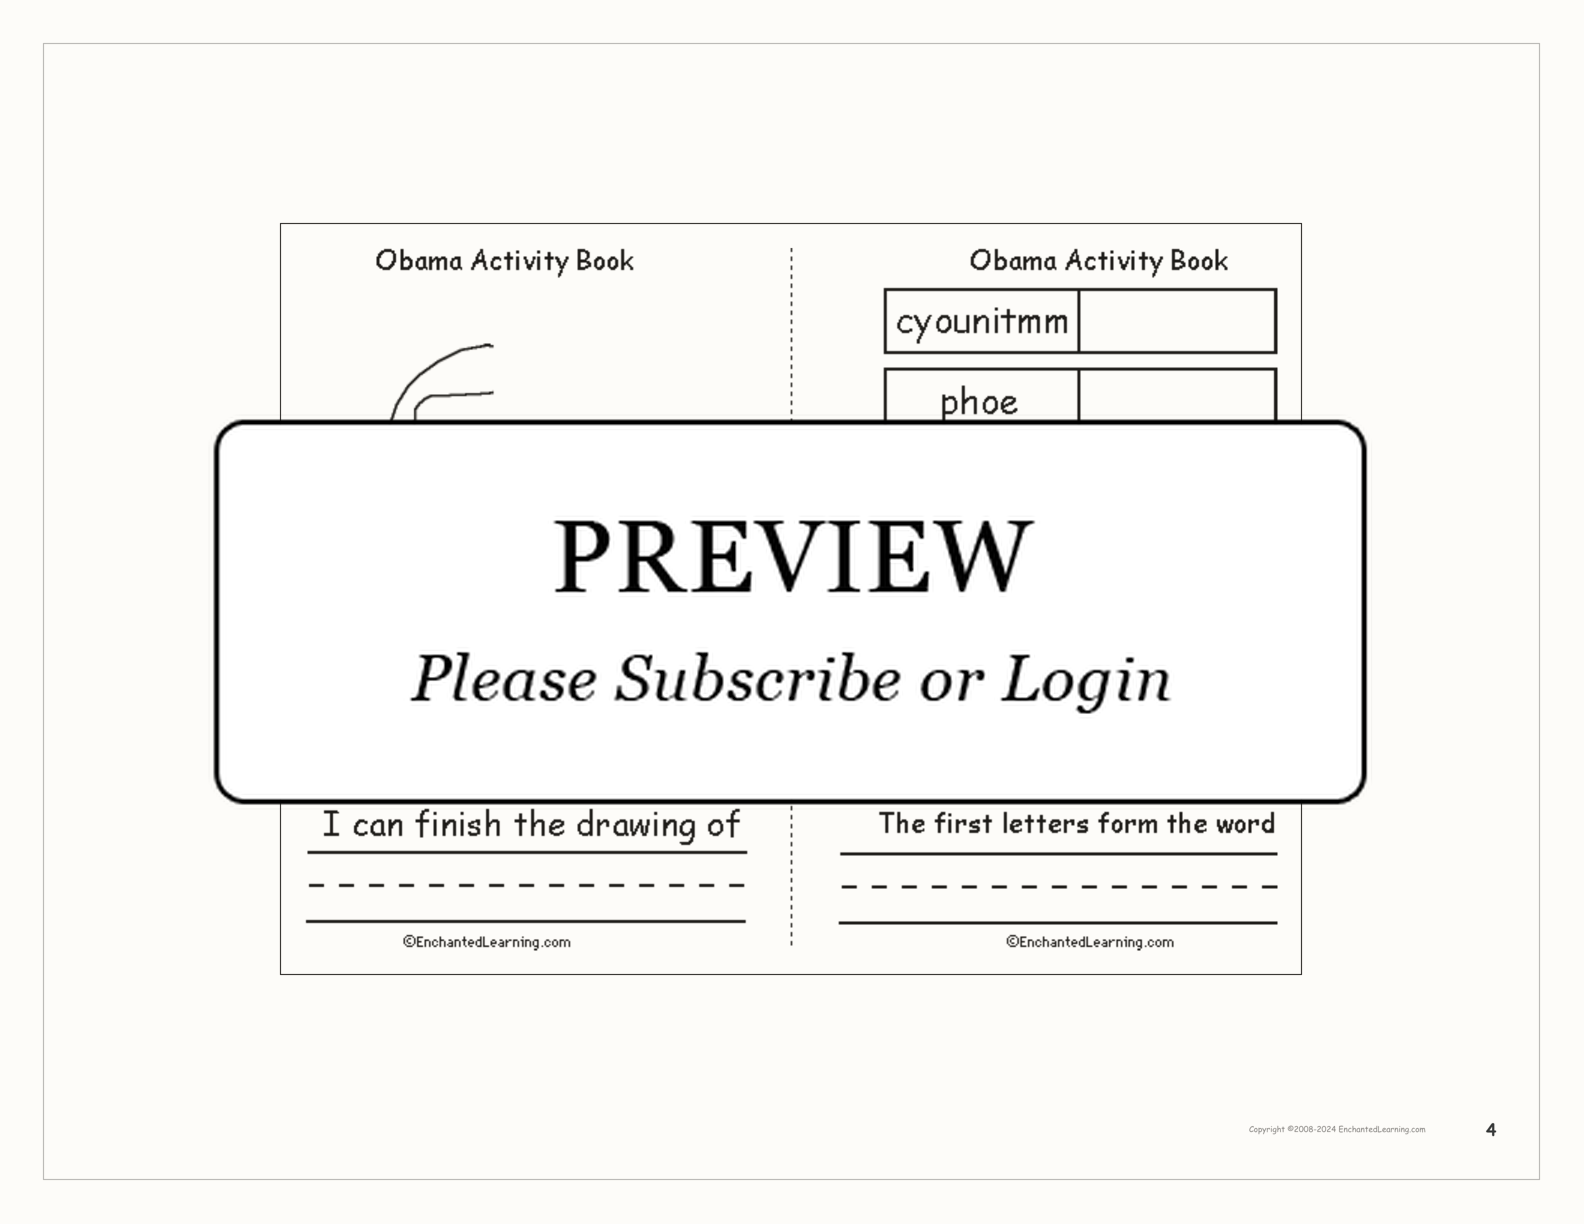 Barack Obama Activity Book interactive printout page 4